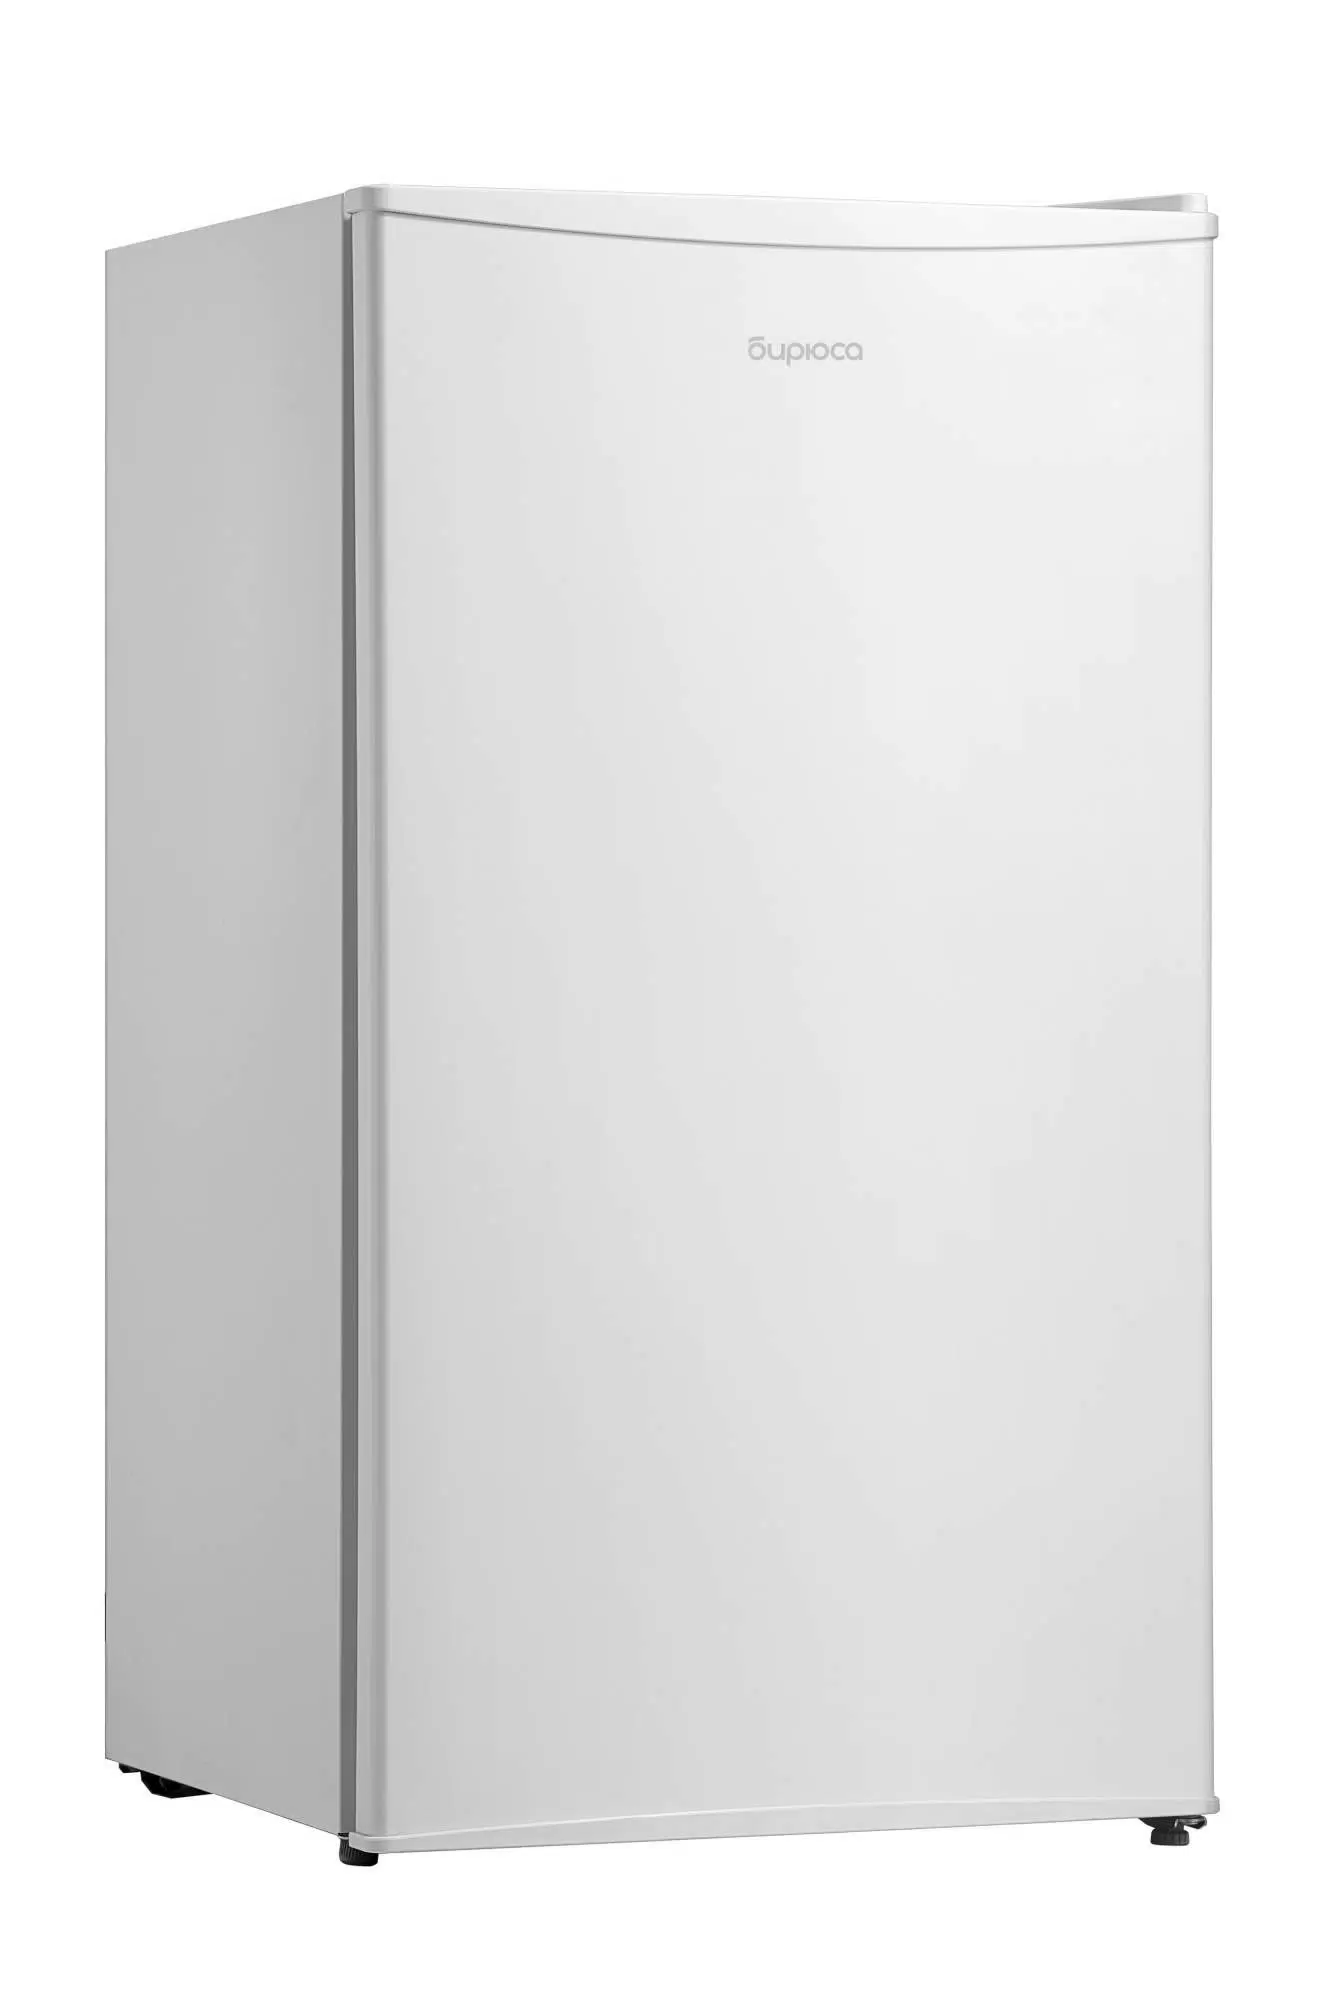 Холодильник Бирюса B-95 белый 